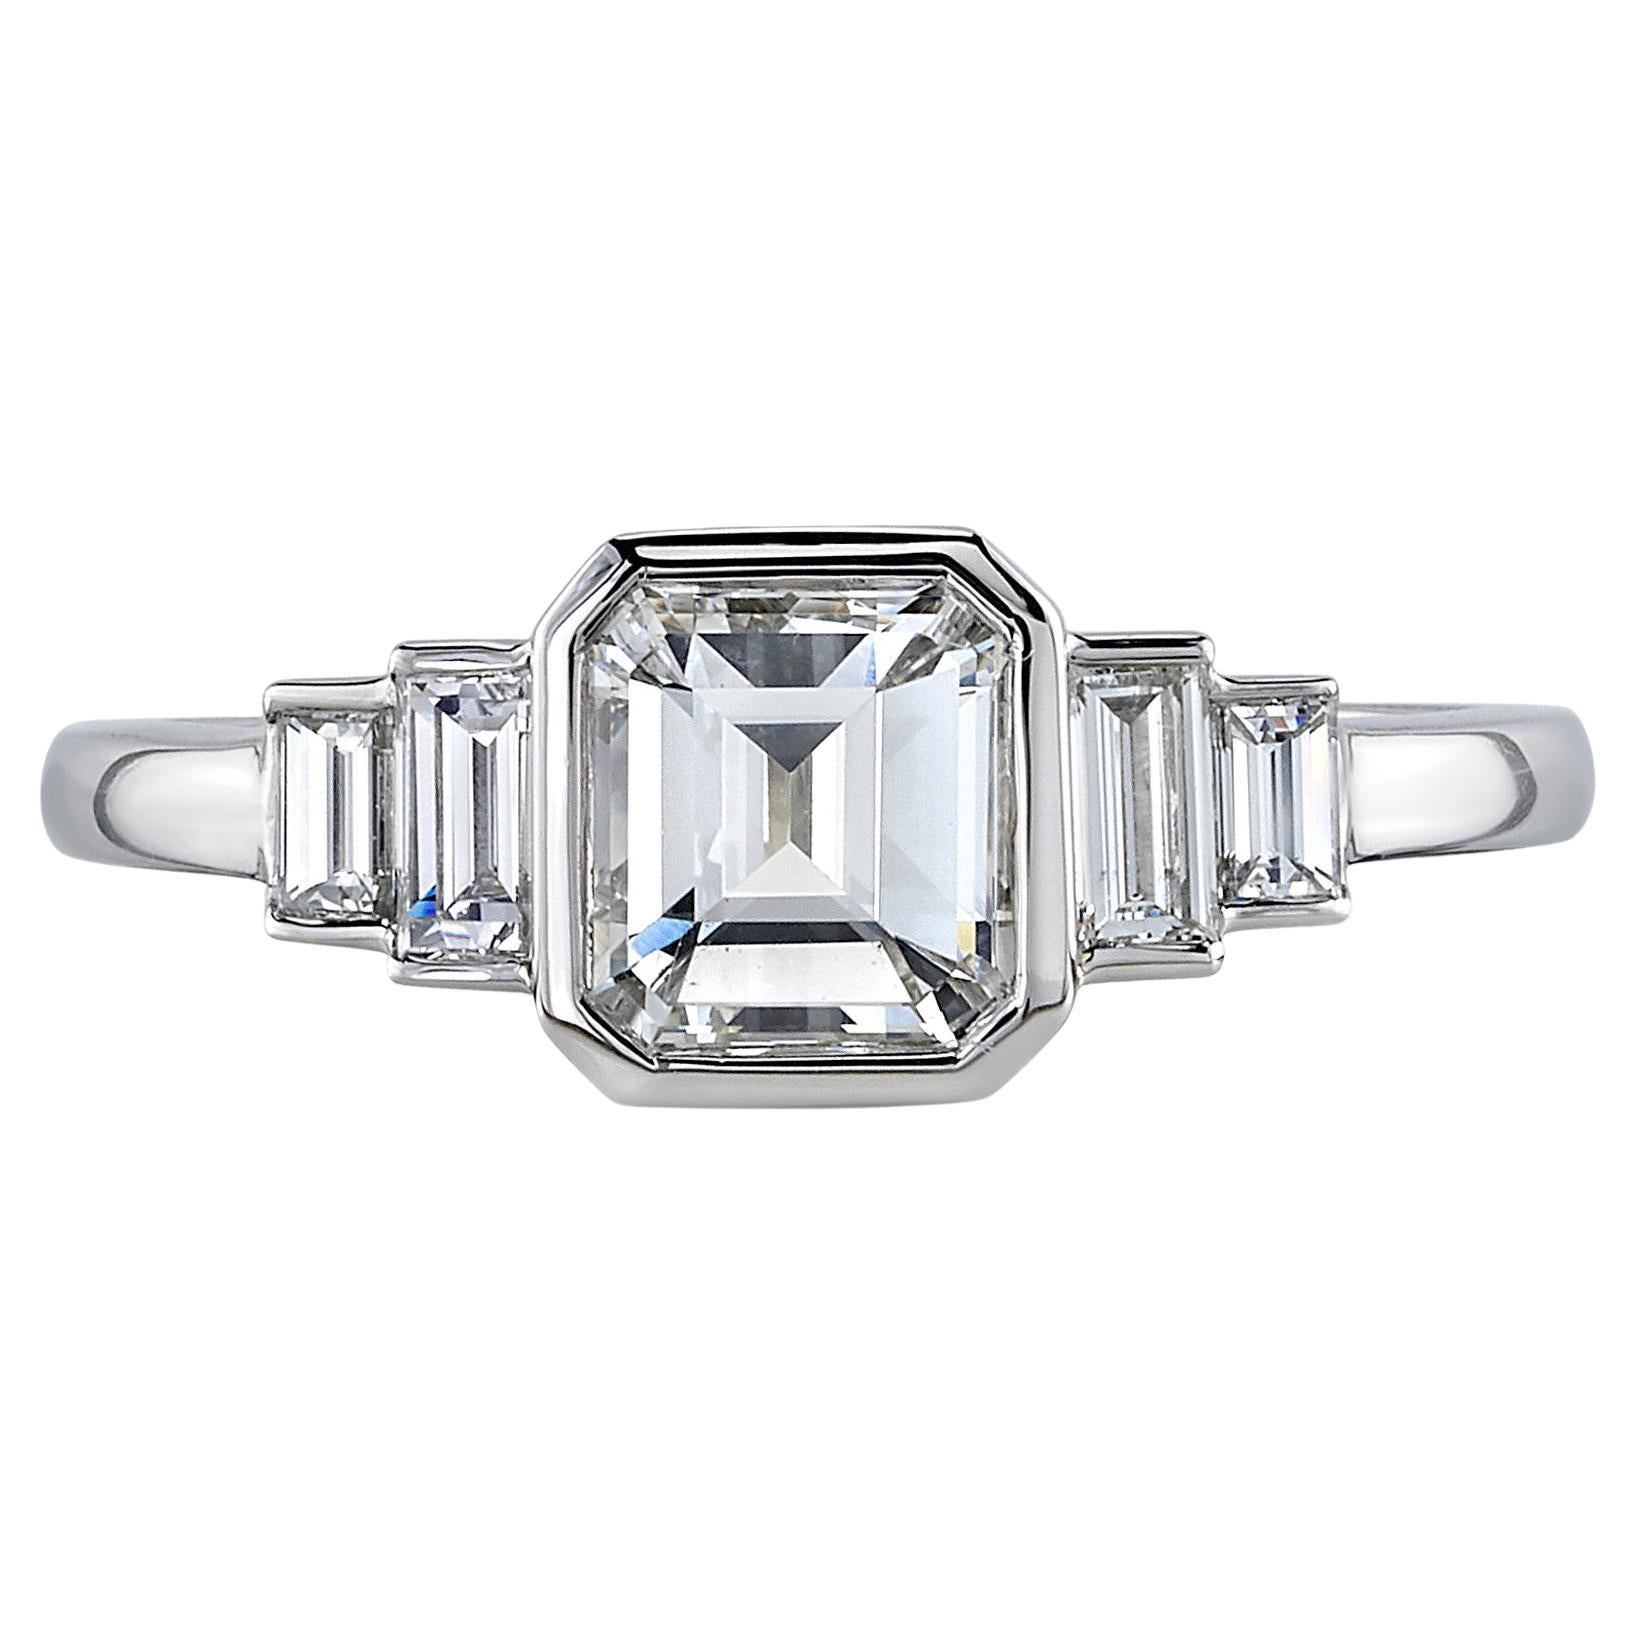 Handcrafted Caroline Emerald Cut Diamond Ring by Single Stone